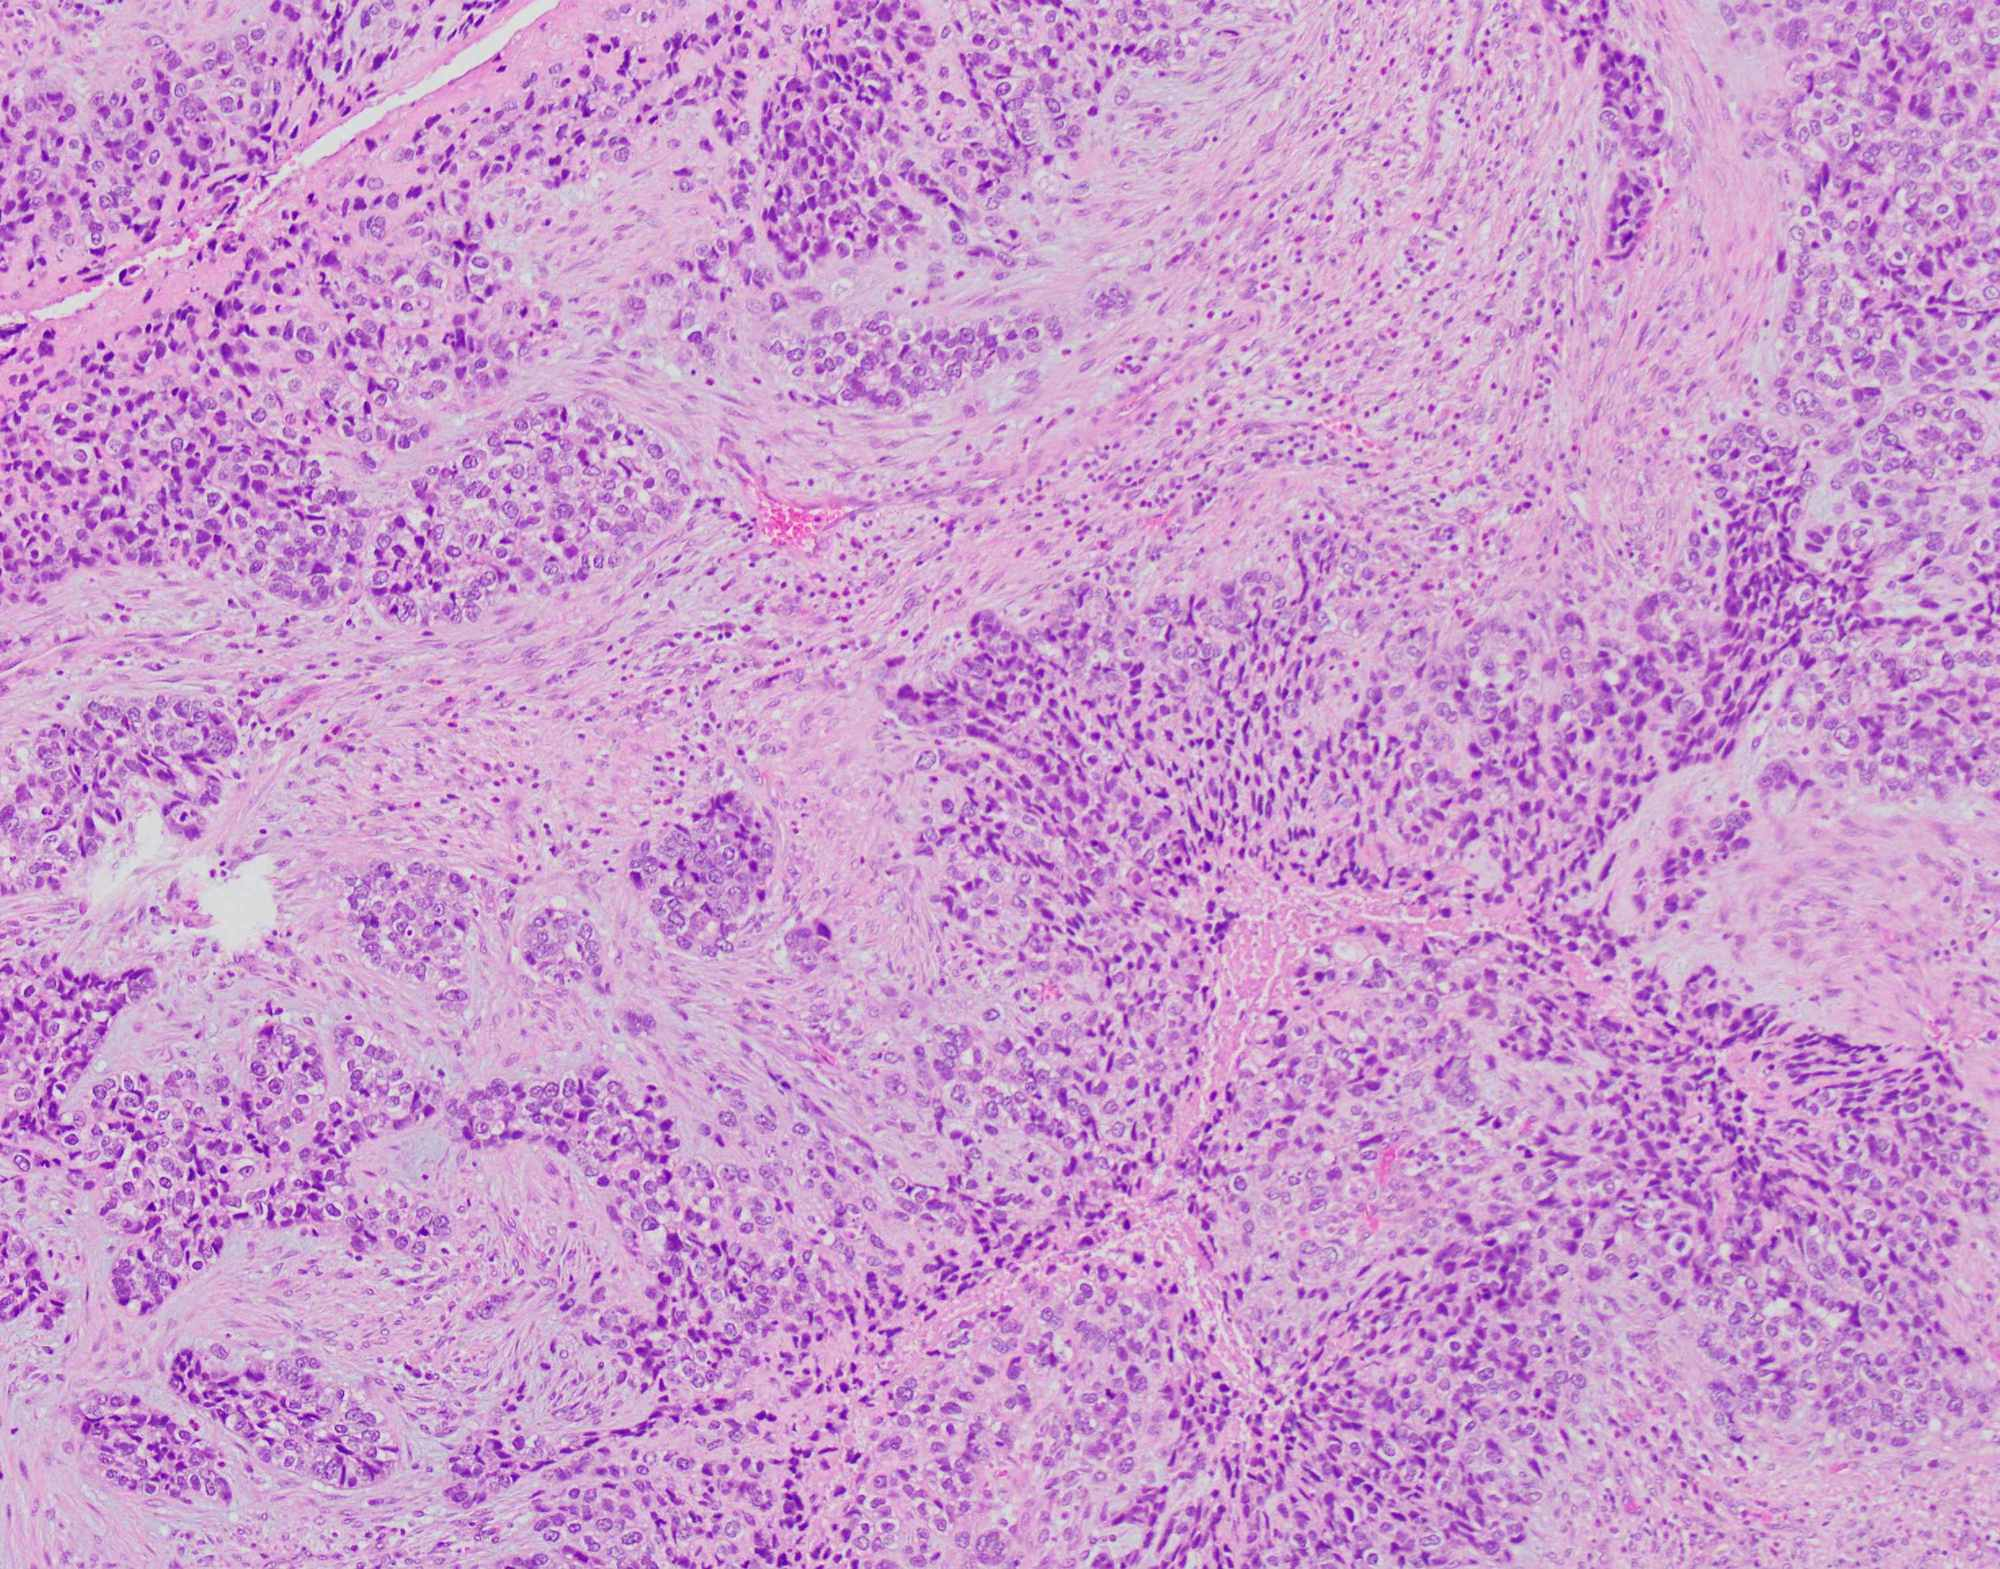 malignant mesothelioma lymph node metastasis